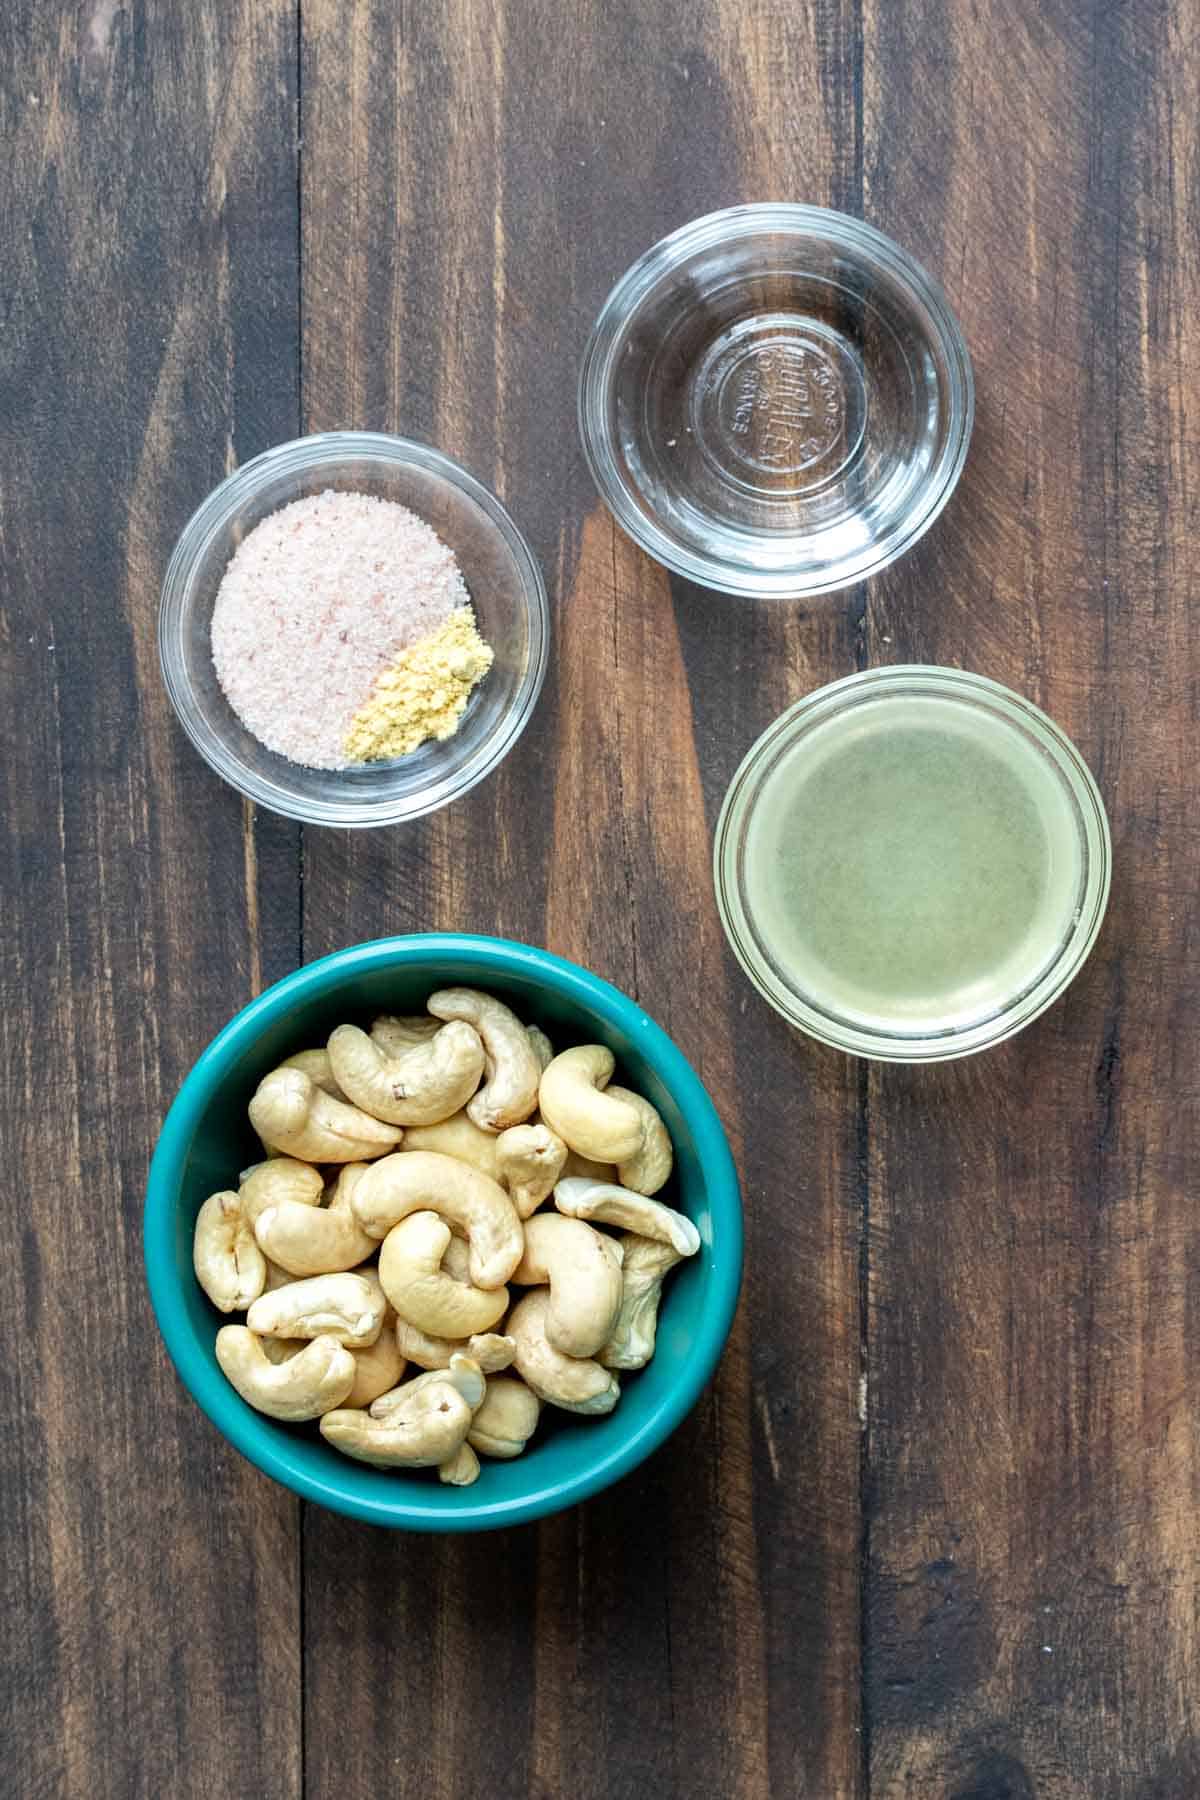 A bowl of cashews, salt, lemon juice and white vinegar on a wooden surface